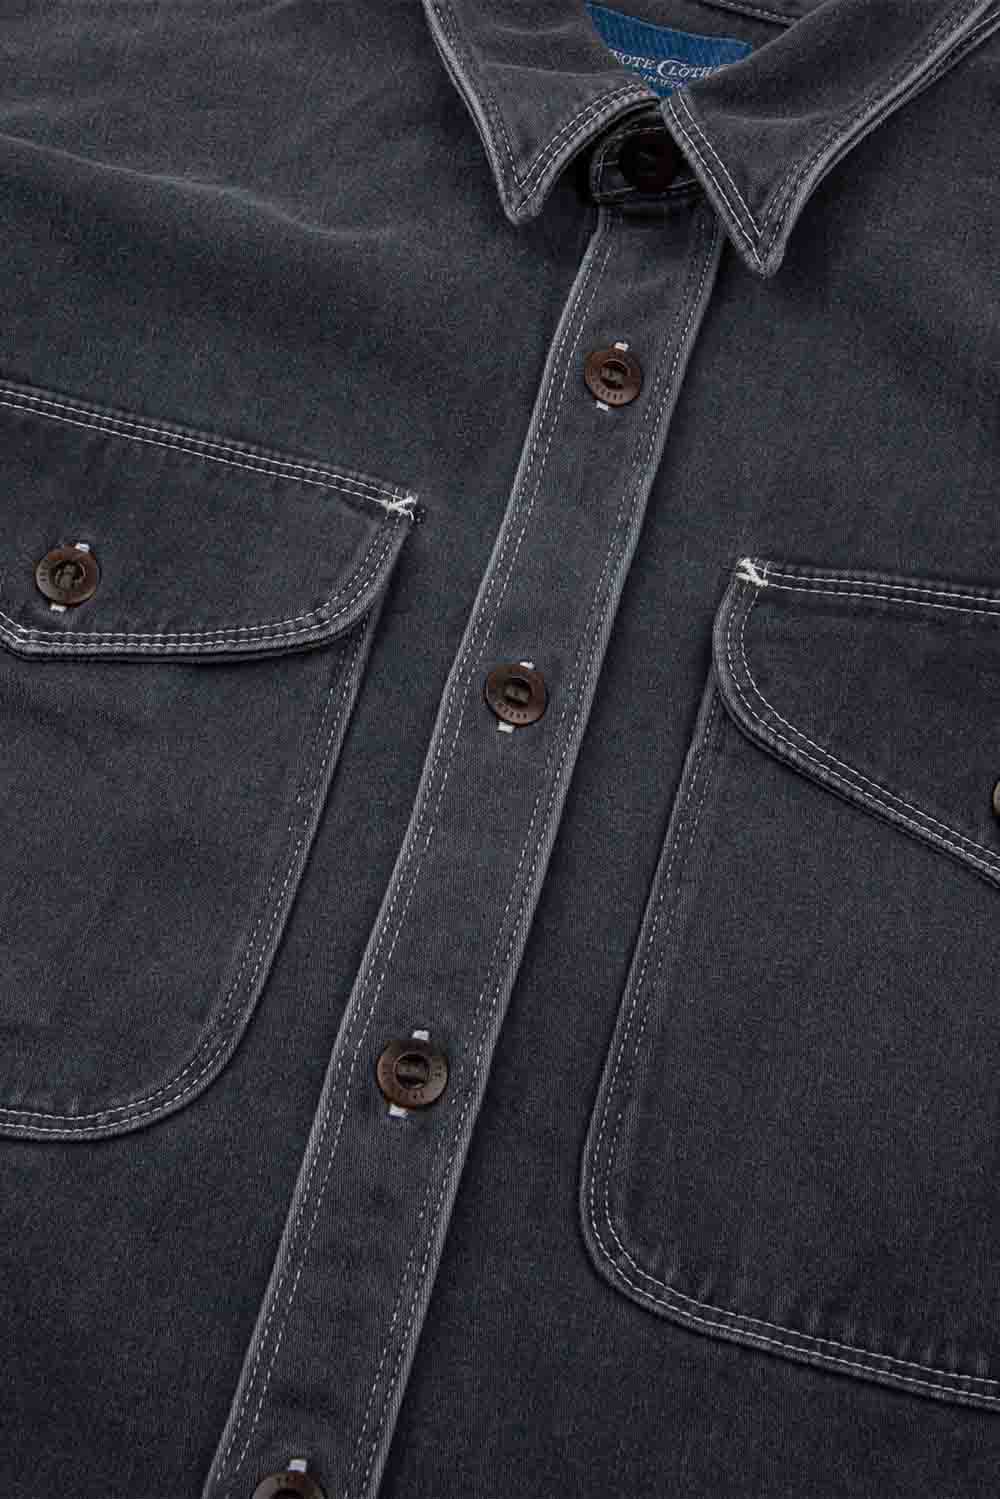 Freenote Cloth - Utility Shirt - Charcoal - Detail